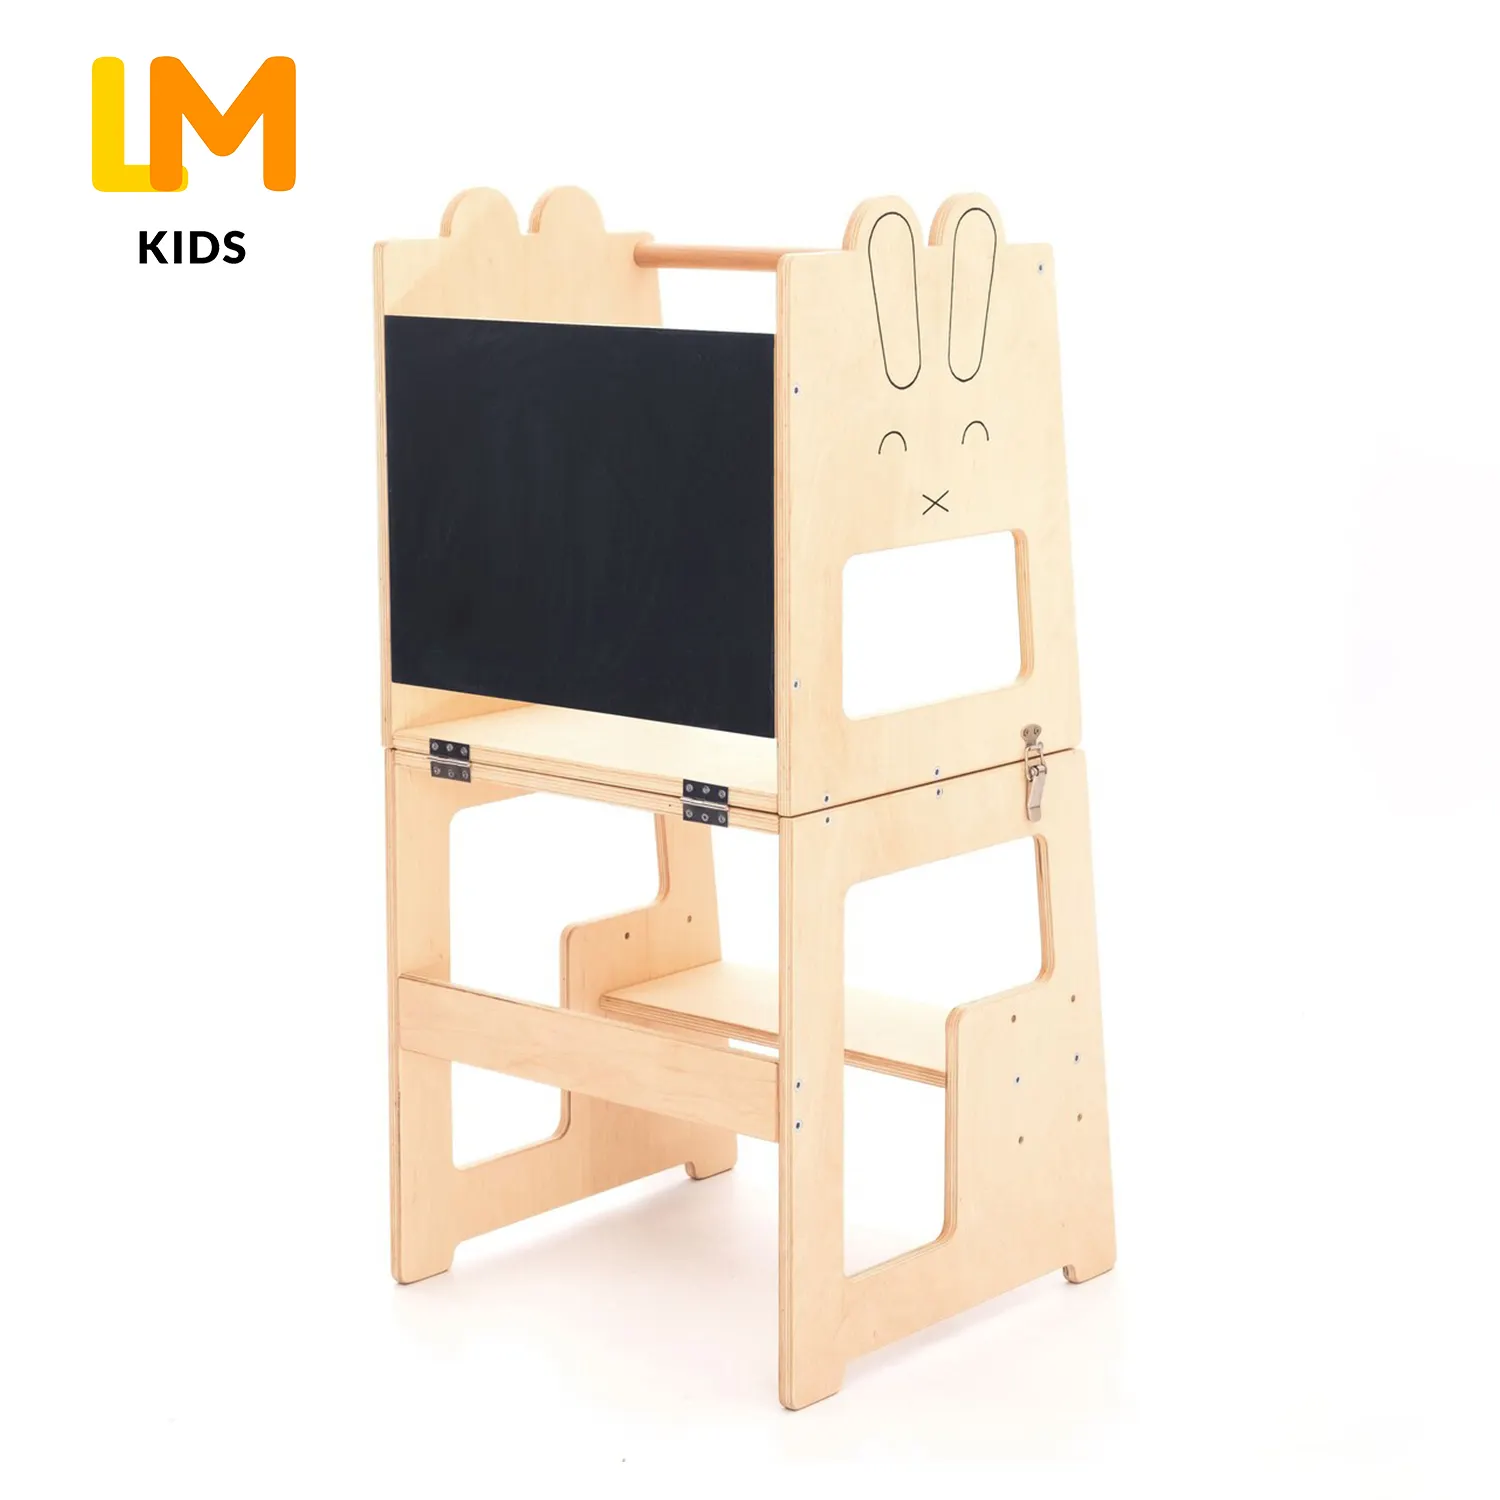 LM KIDS toddler kids adjustable montessori furniture kitchen helper step wood foldable learning tower with blackboard